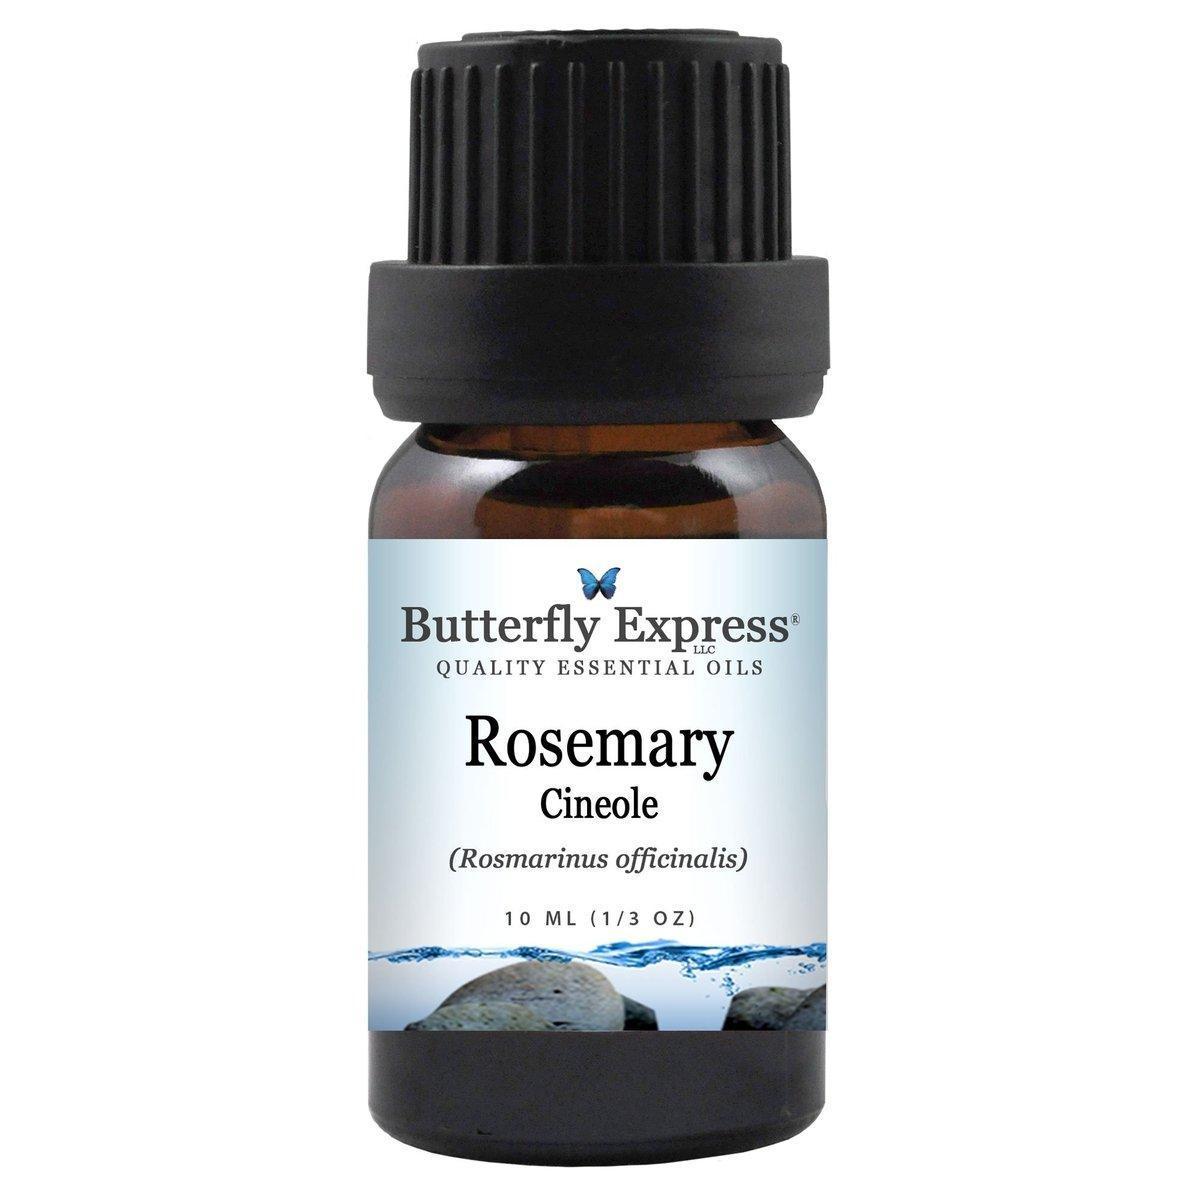 Rosemary Cineole essential oils